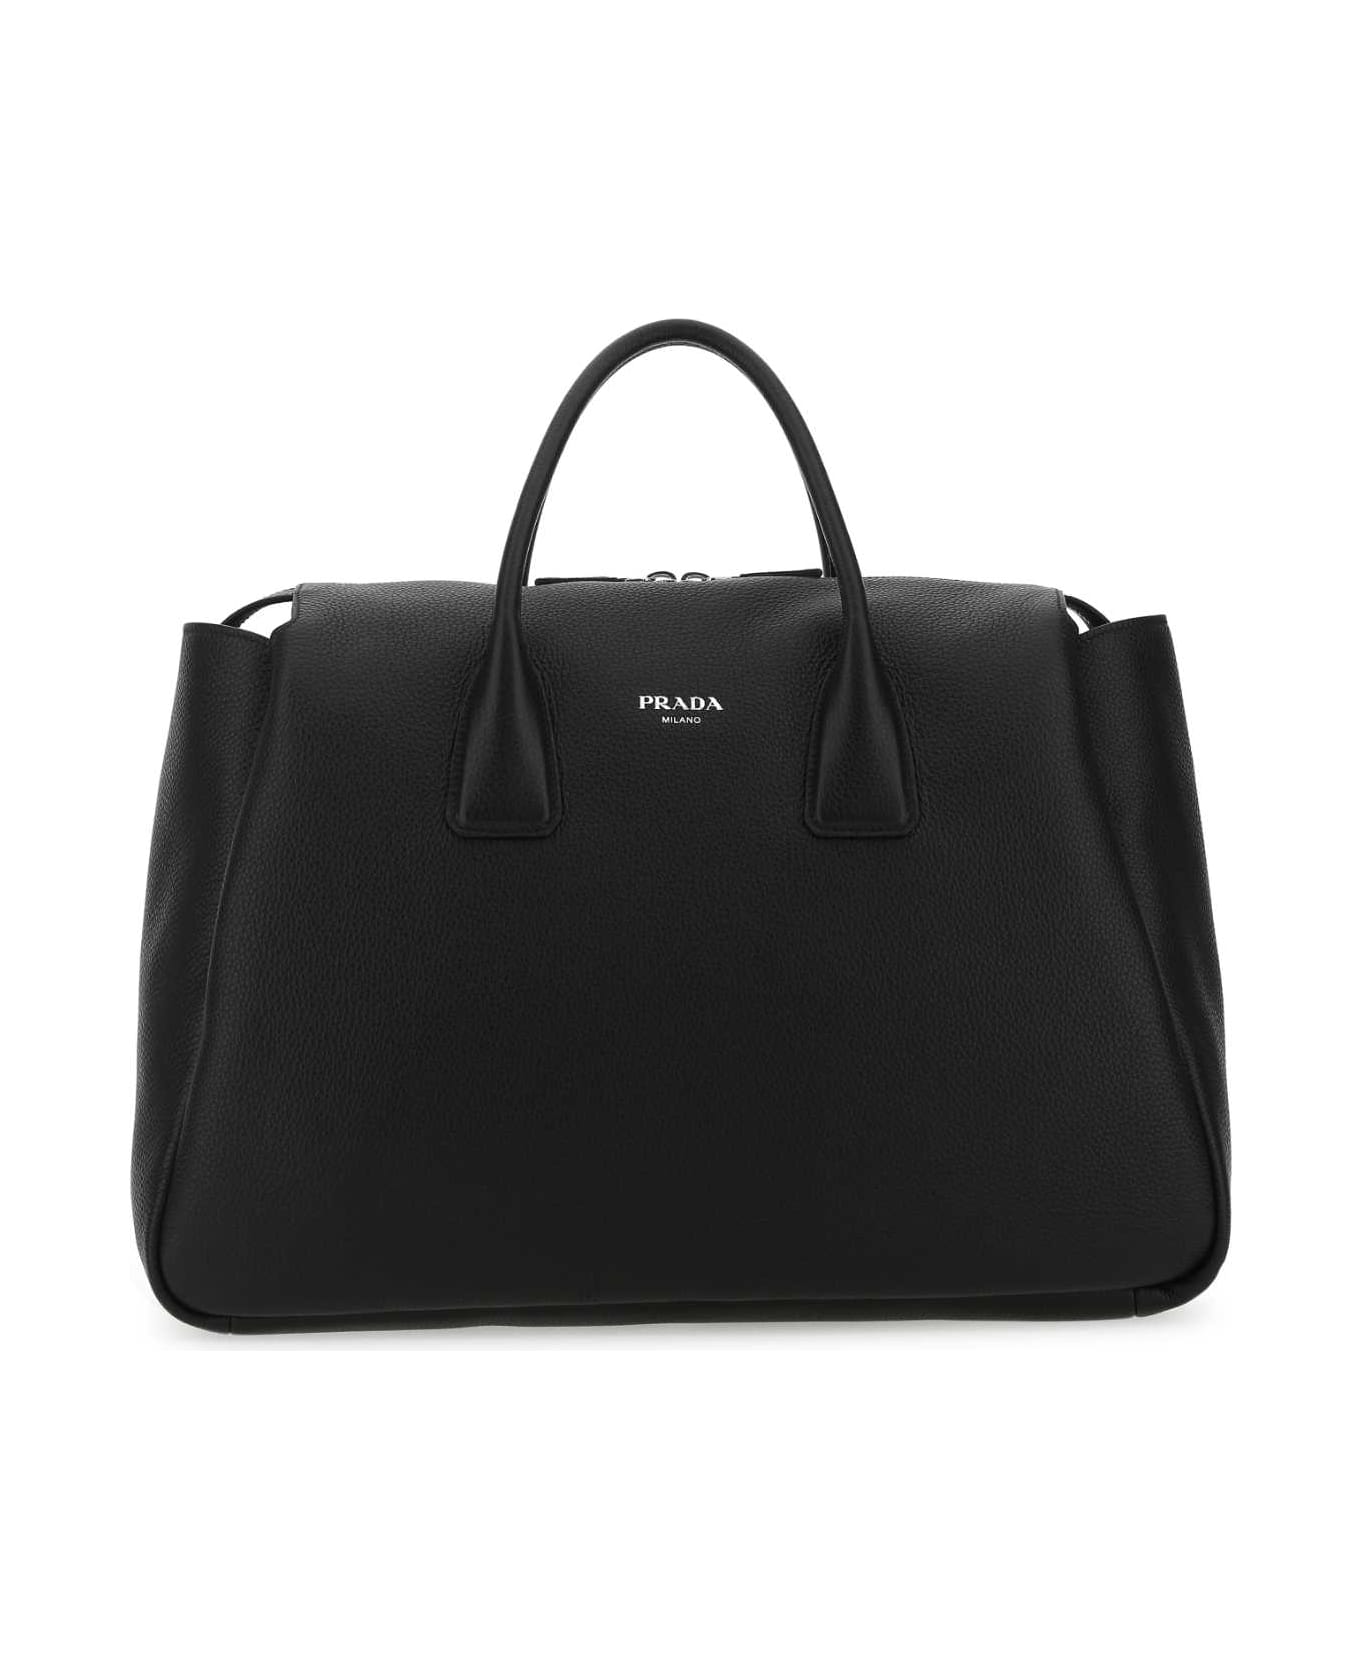 Prada Black Leather Travel Bag - F0002 トートバッグ